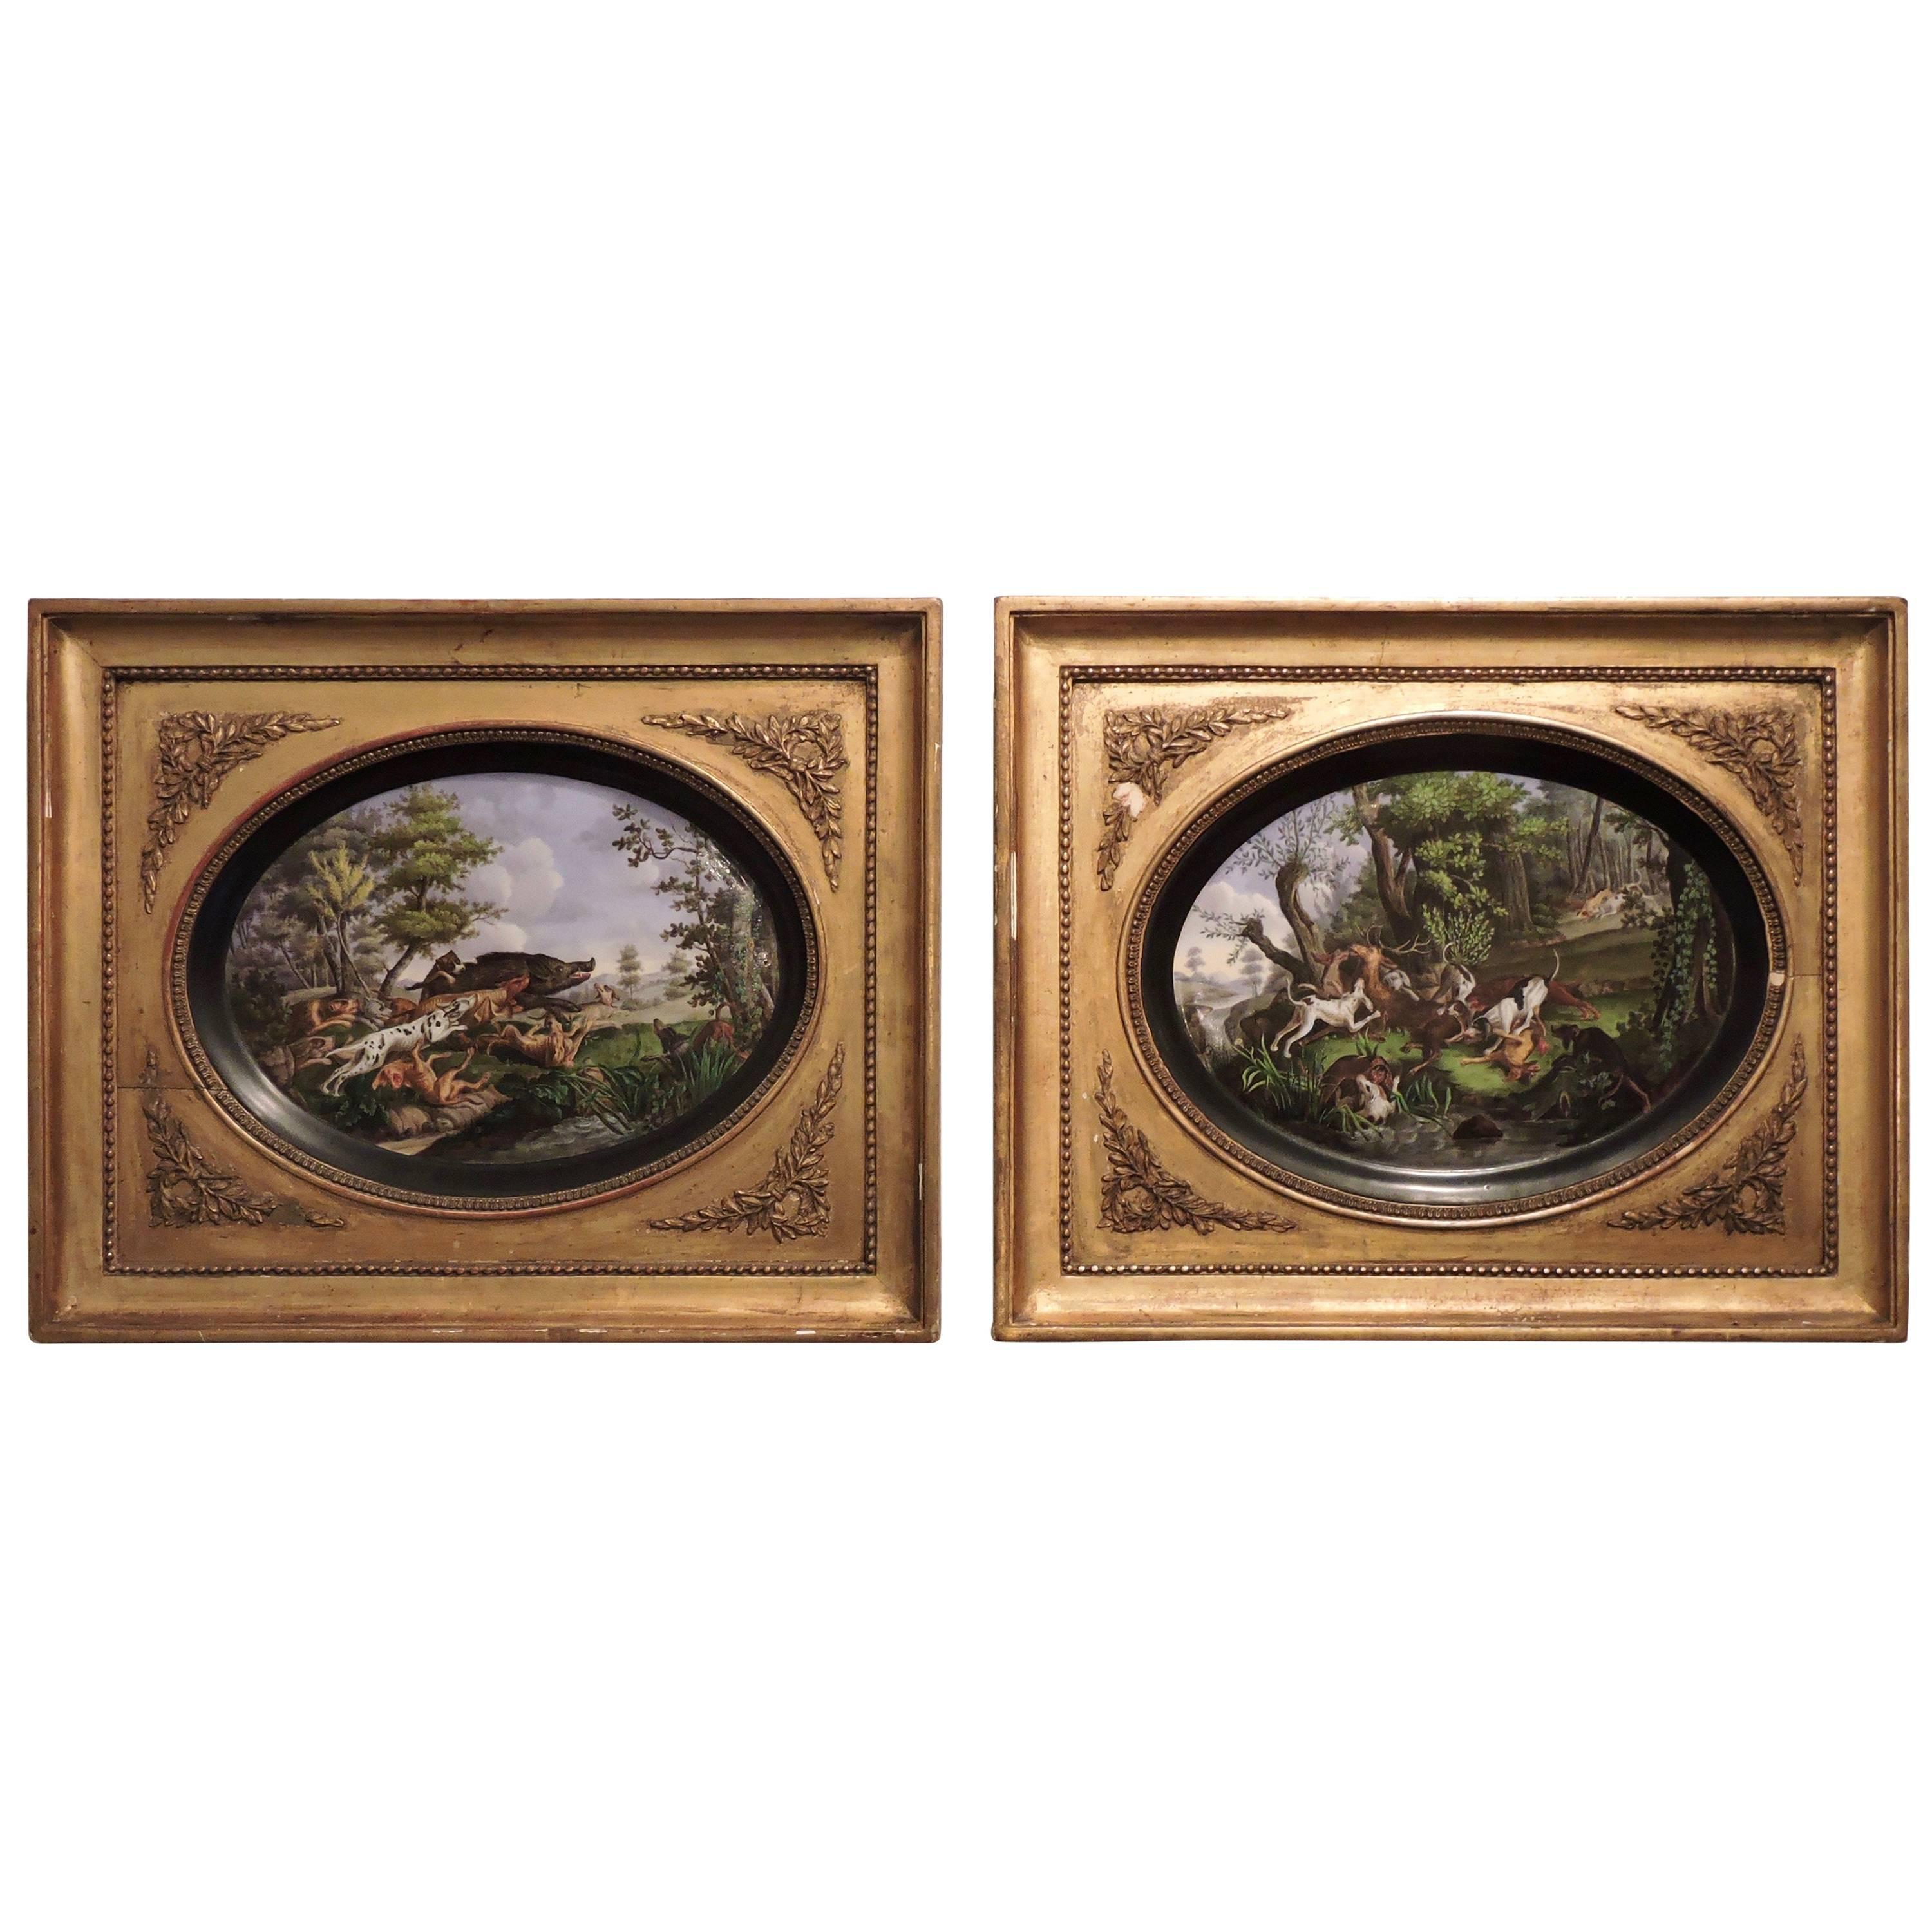 Pair of Framed Hand-Painted Paris Porcelain Hunting Scenes, after N. Desportes